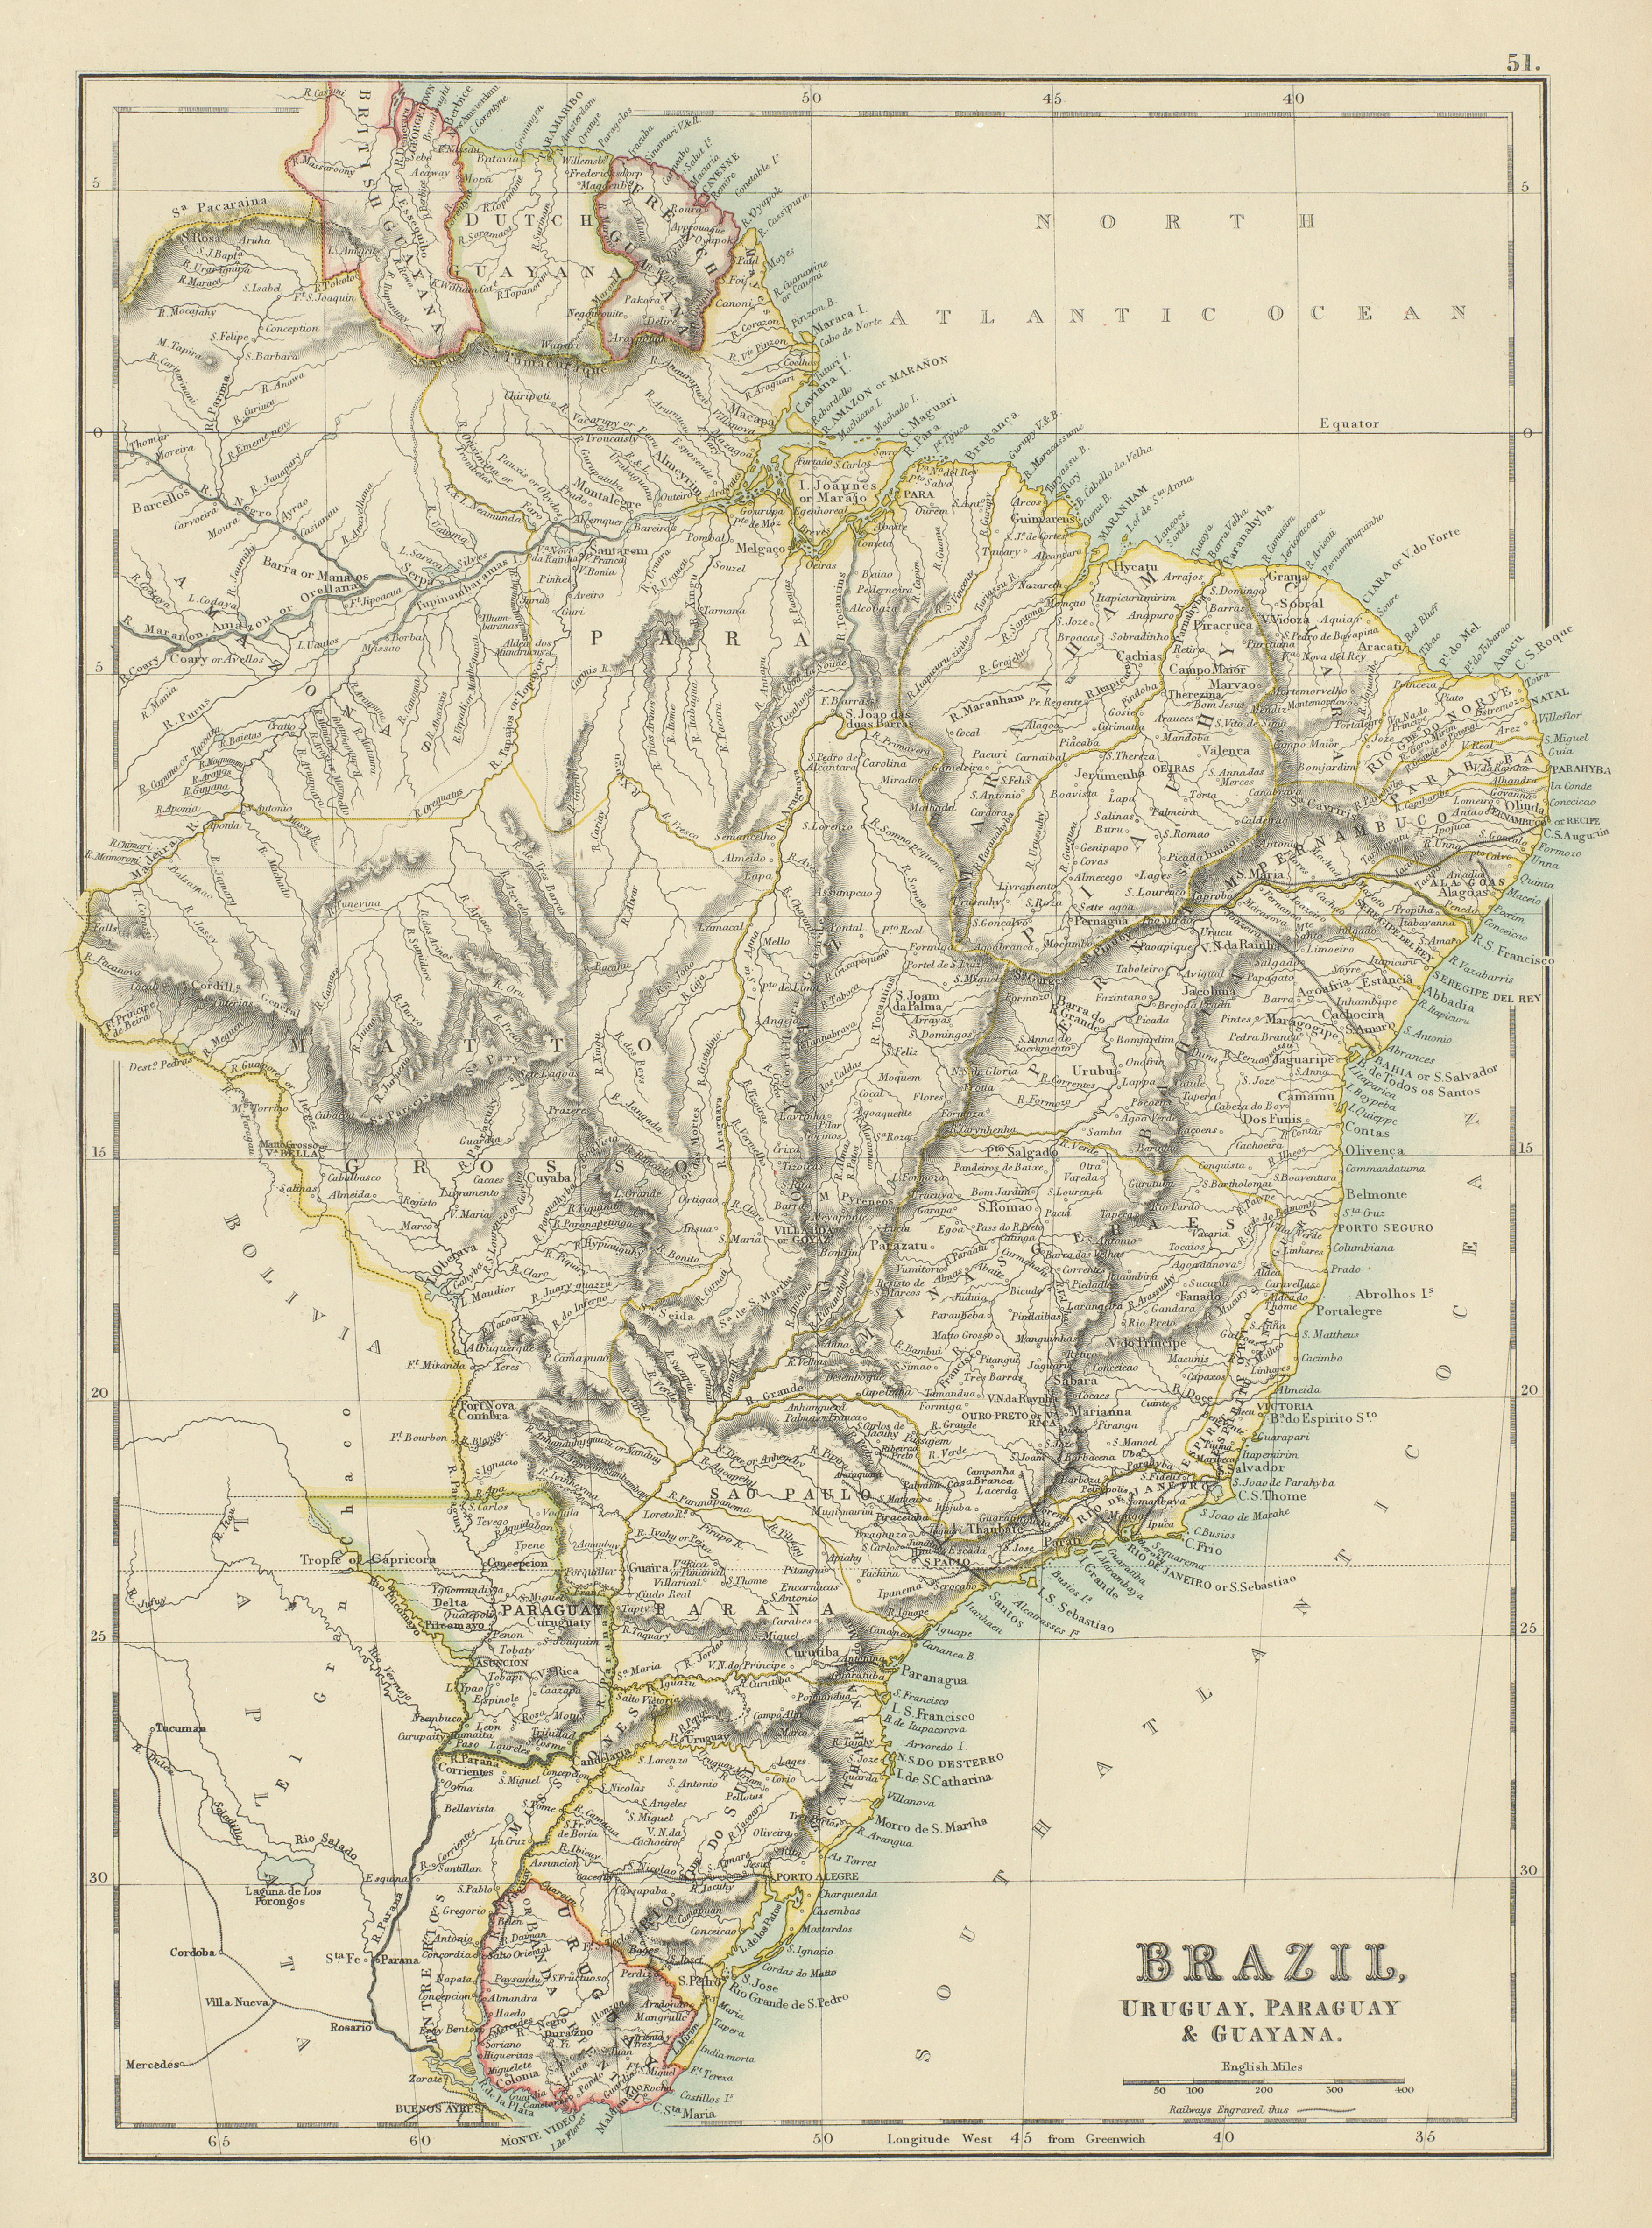 Associate Product Brazil, Uruguay, Paraguay & Guayana. Guyanas. BARTHOLOMEW 1898 old antique map